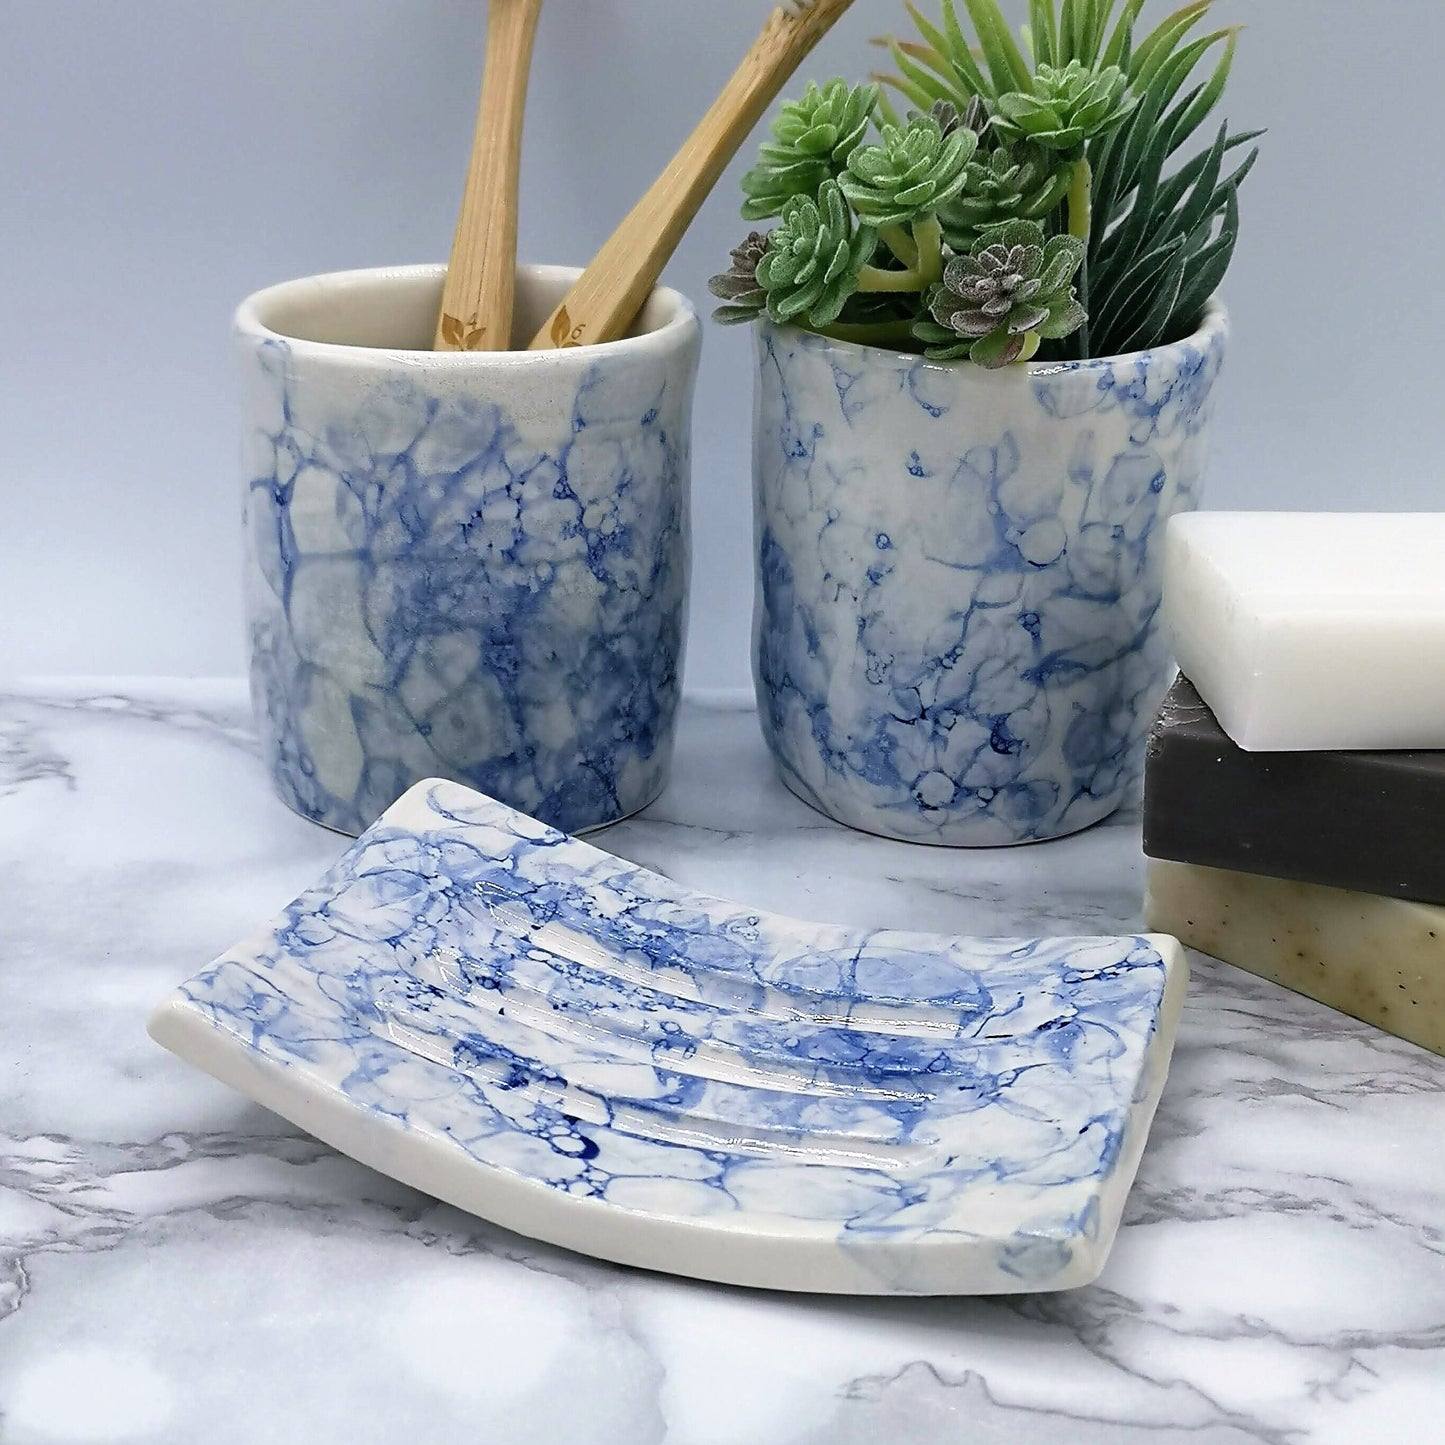 Handmade Ceramic Soap Dish 12cm/4.7in, Soap Bar Holder, Eco Friendly Bathroom Accessories, Zero Waste Clay Tray With Drain - Ceramica Ana Rafael